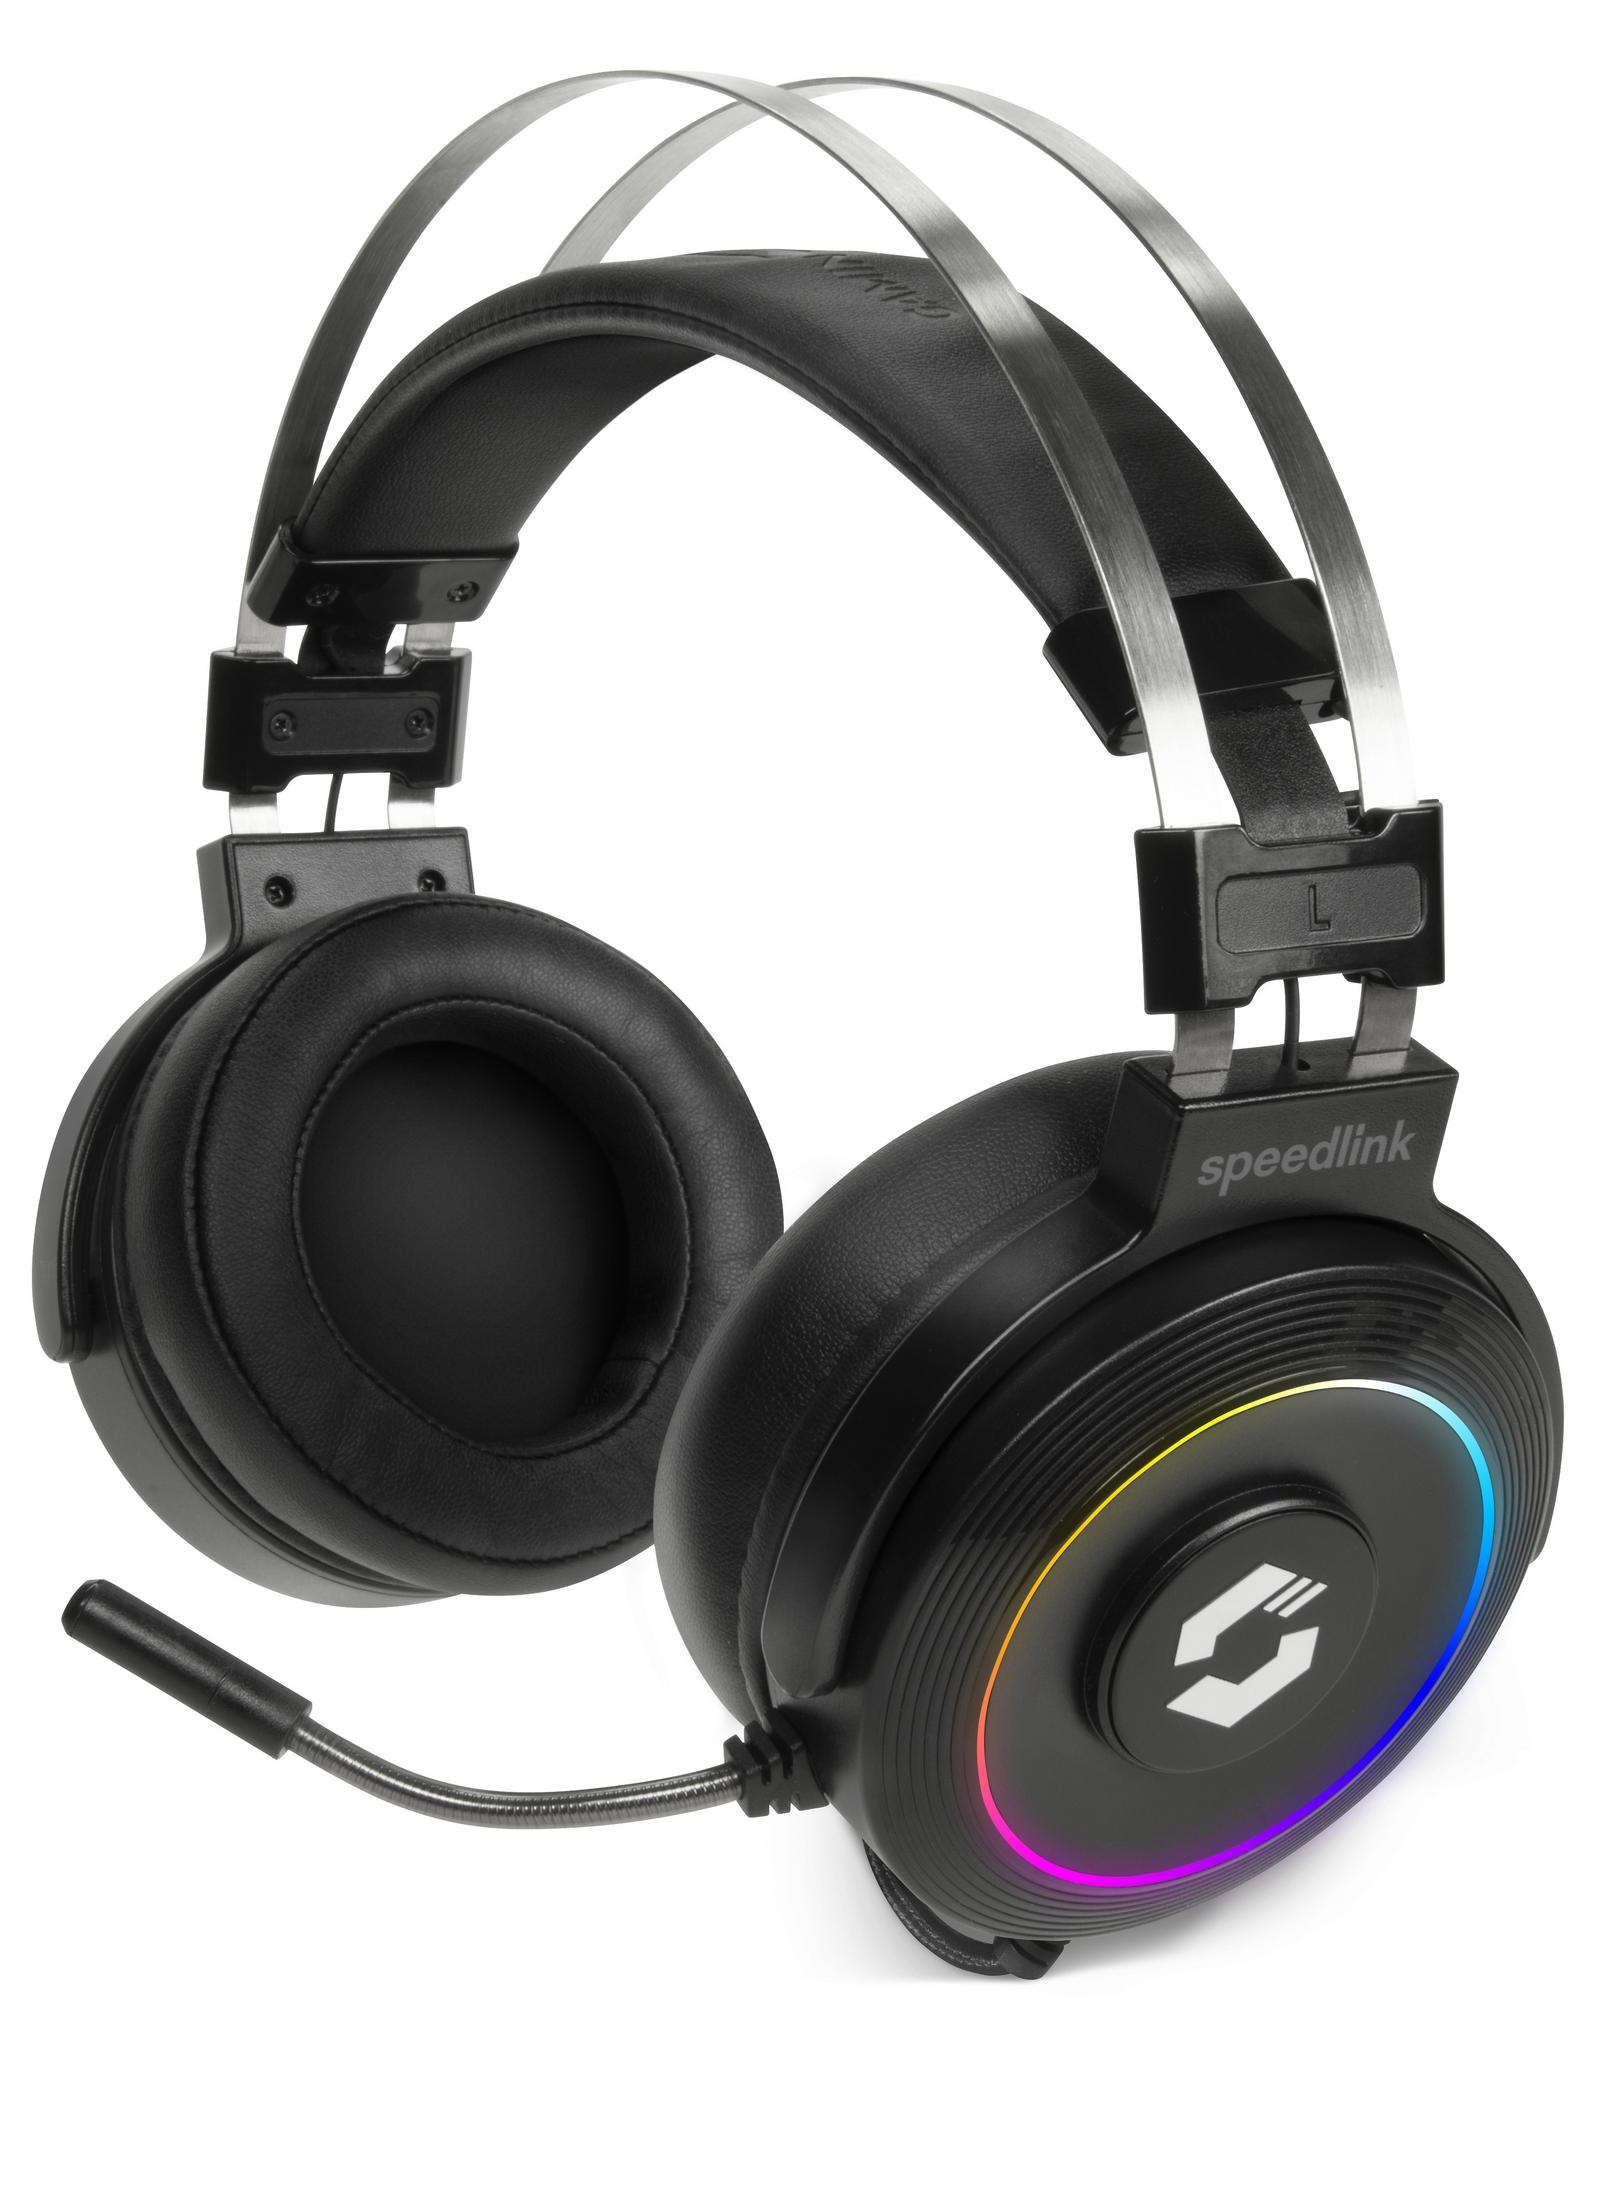 SPEEDLINK SL-860005-BK ORIOS 7.1 BLACK, RGB Schwarz Over-ear Gaming GAMING Headset HEADSET